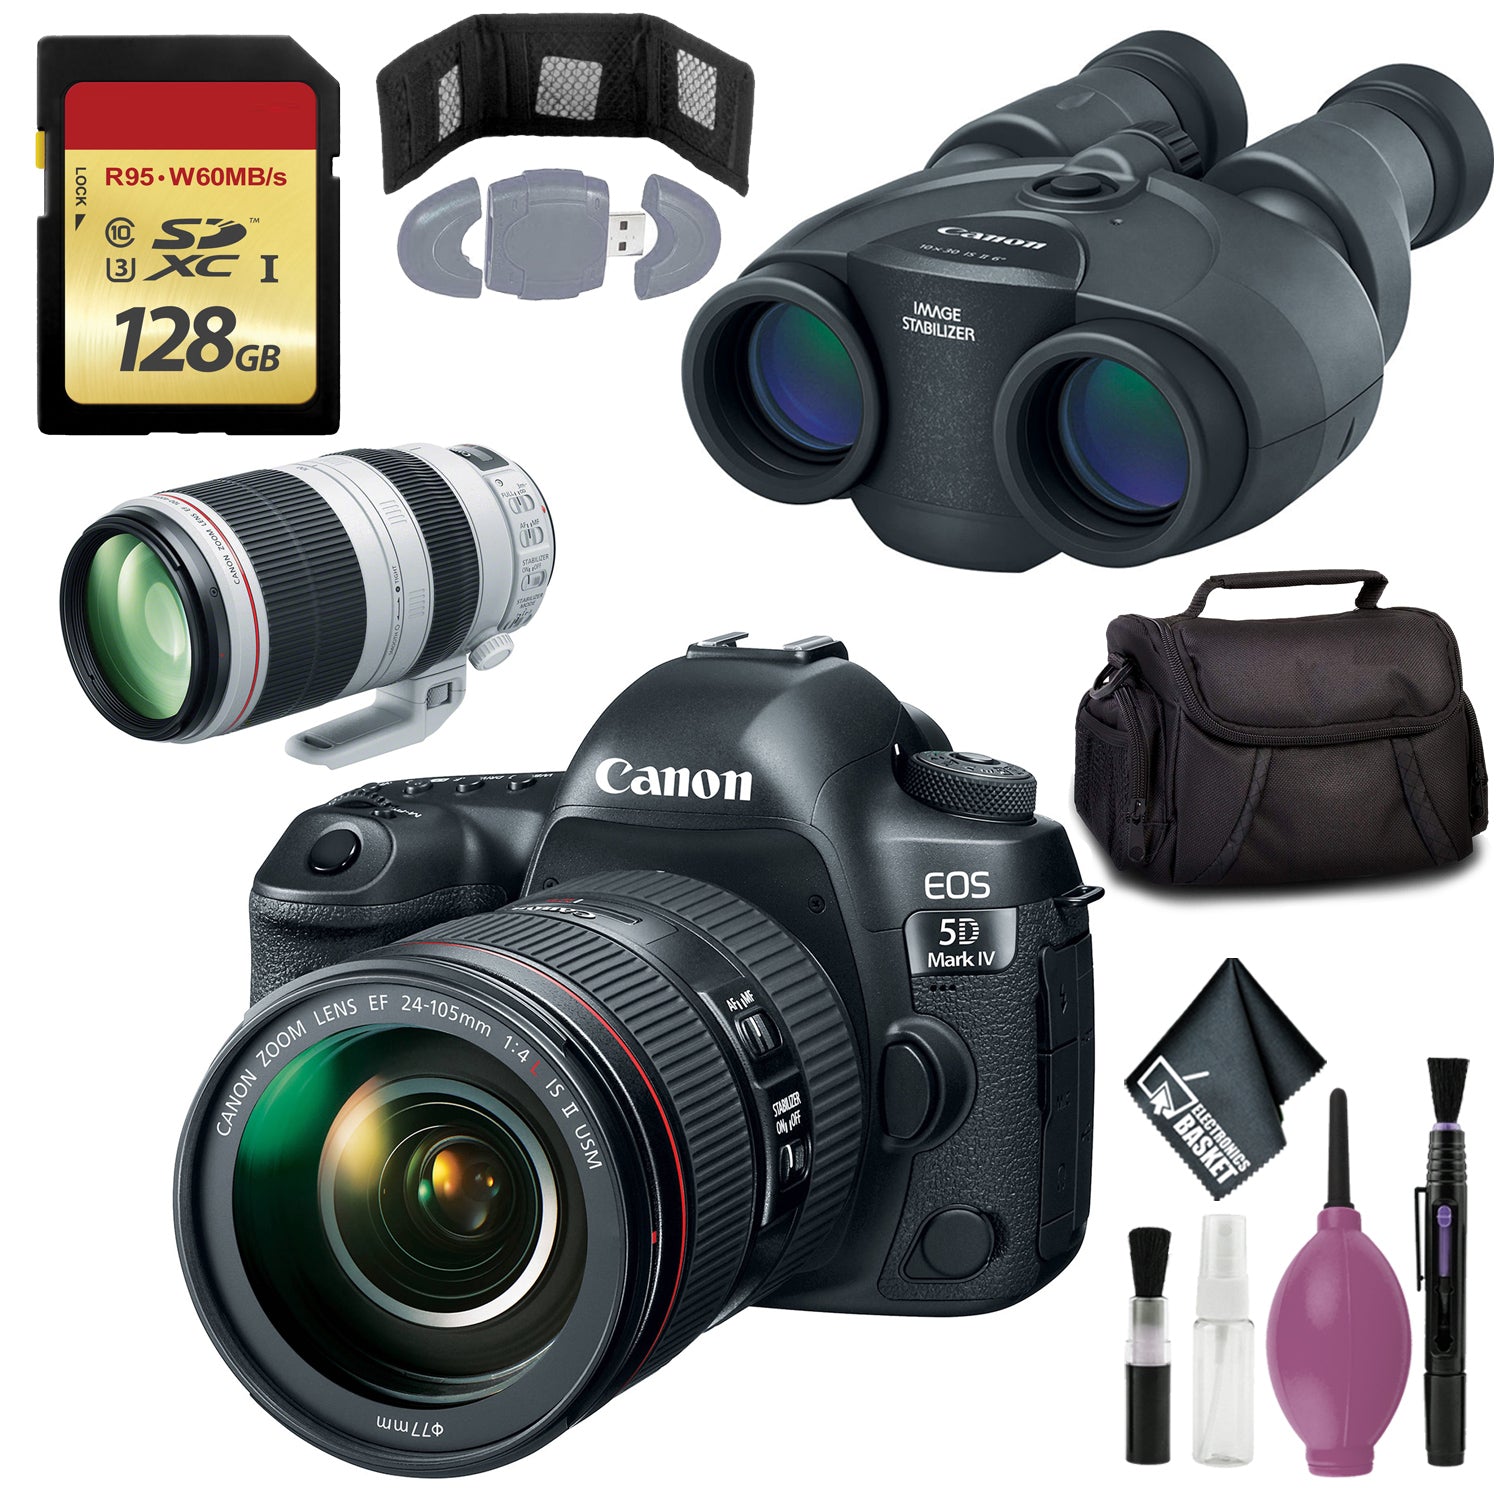 Canon 10x30 IS II Image Stabilized Binocular - EOS 5D Mark IV DSLR Camera w/ 24-105 f/4 II Lens - Case